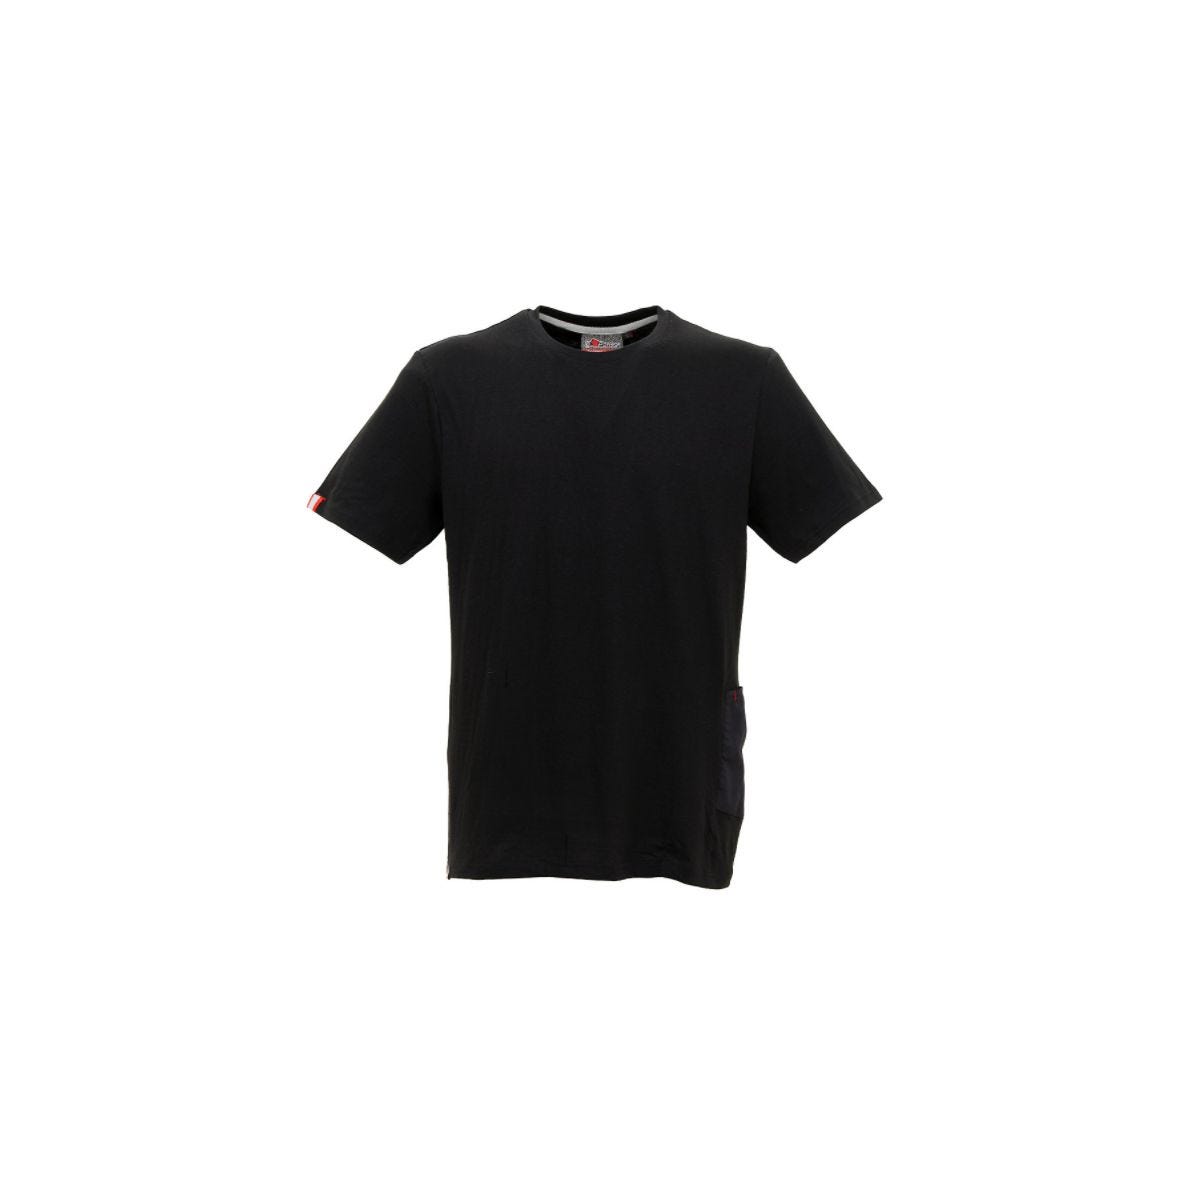 Tee-shirt ROAD Black Carbon - U Power - Taille L 1